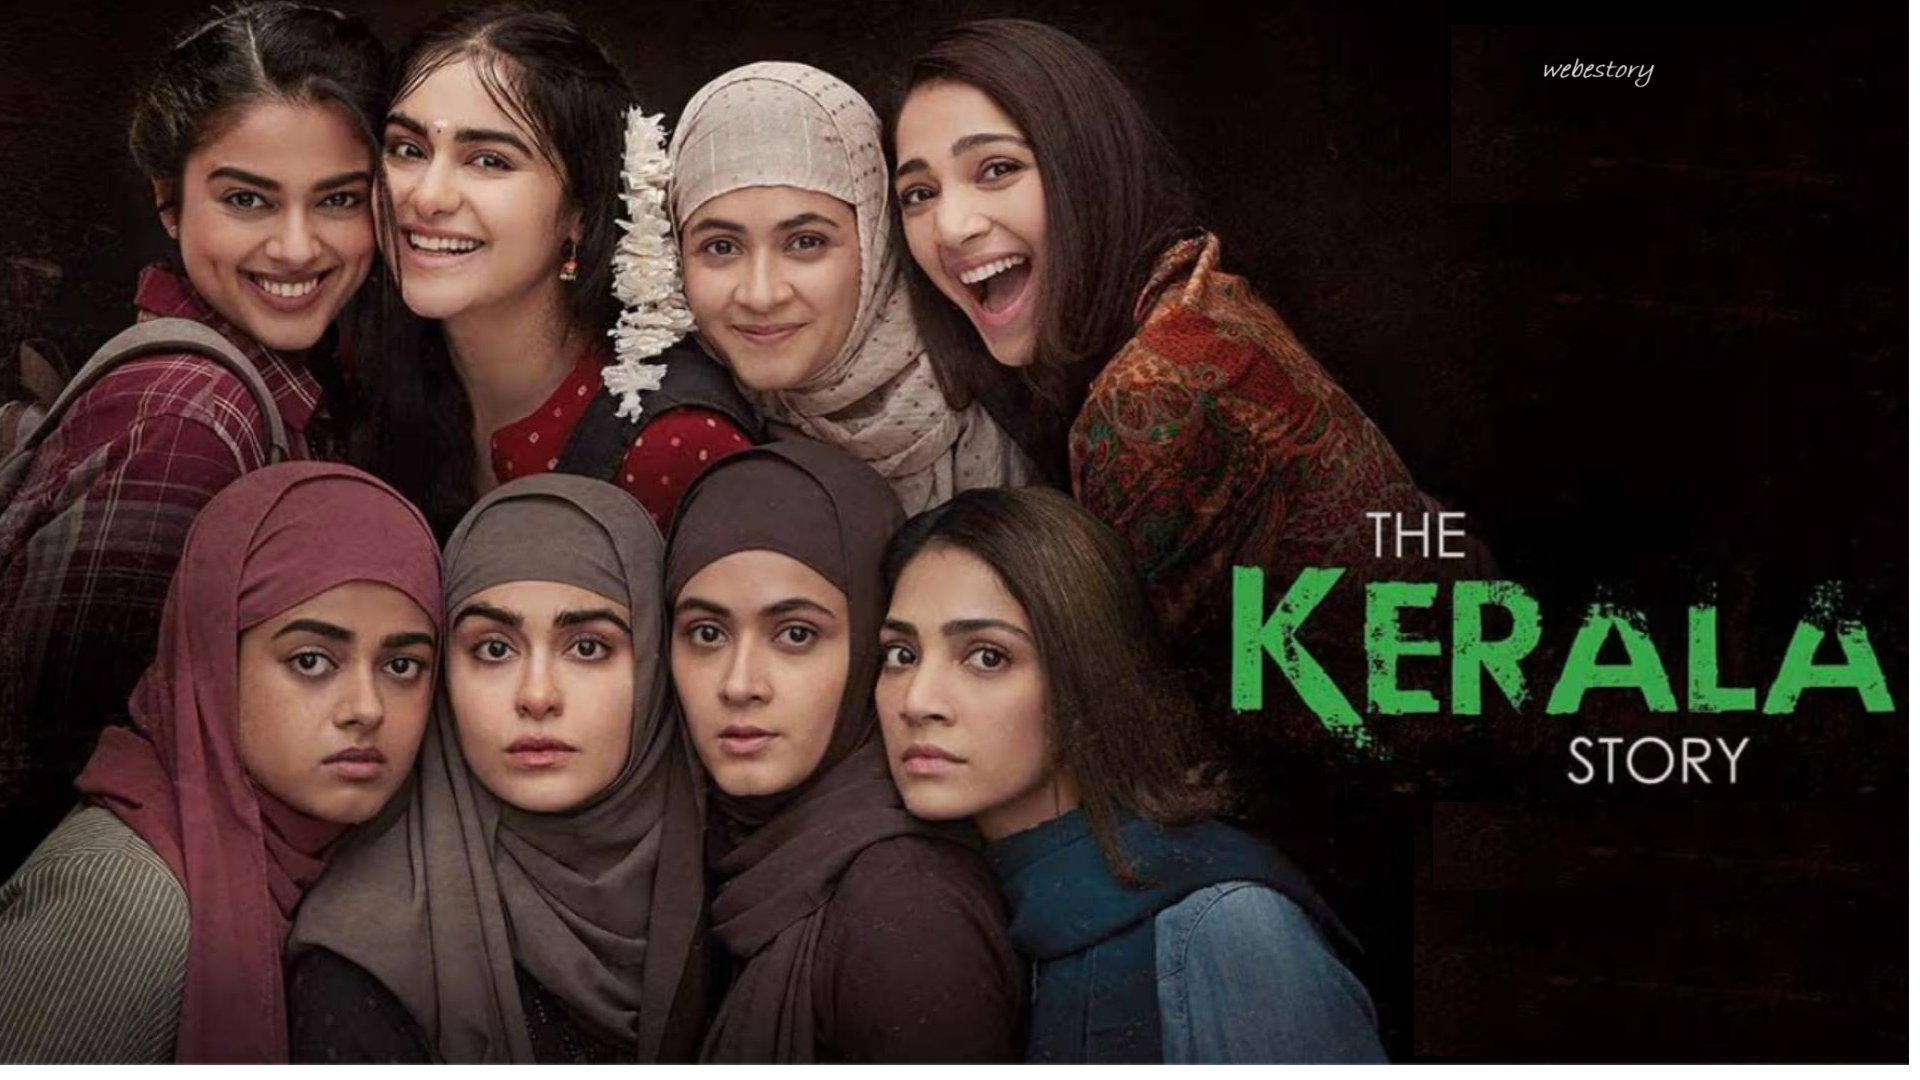 kerala story – The Kerala Story is Indian drama film